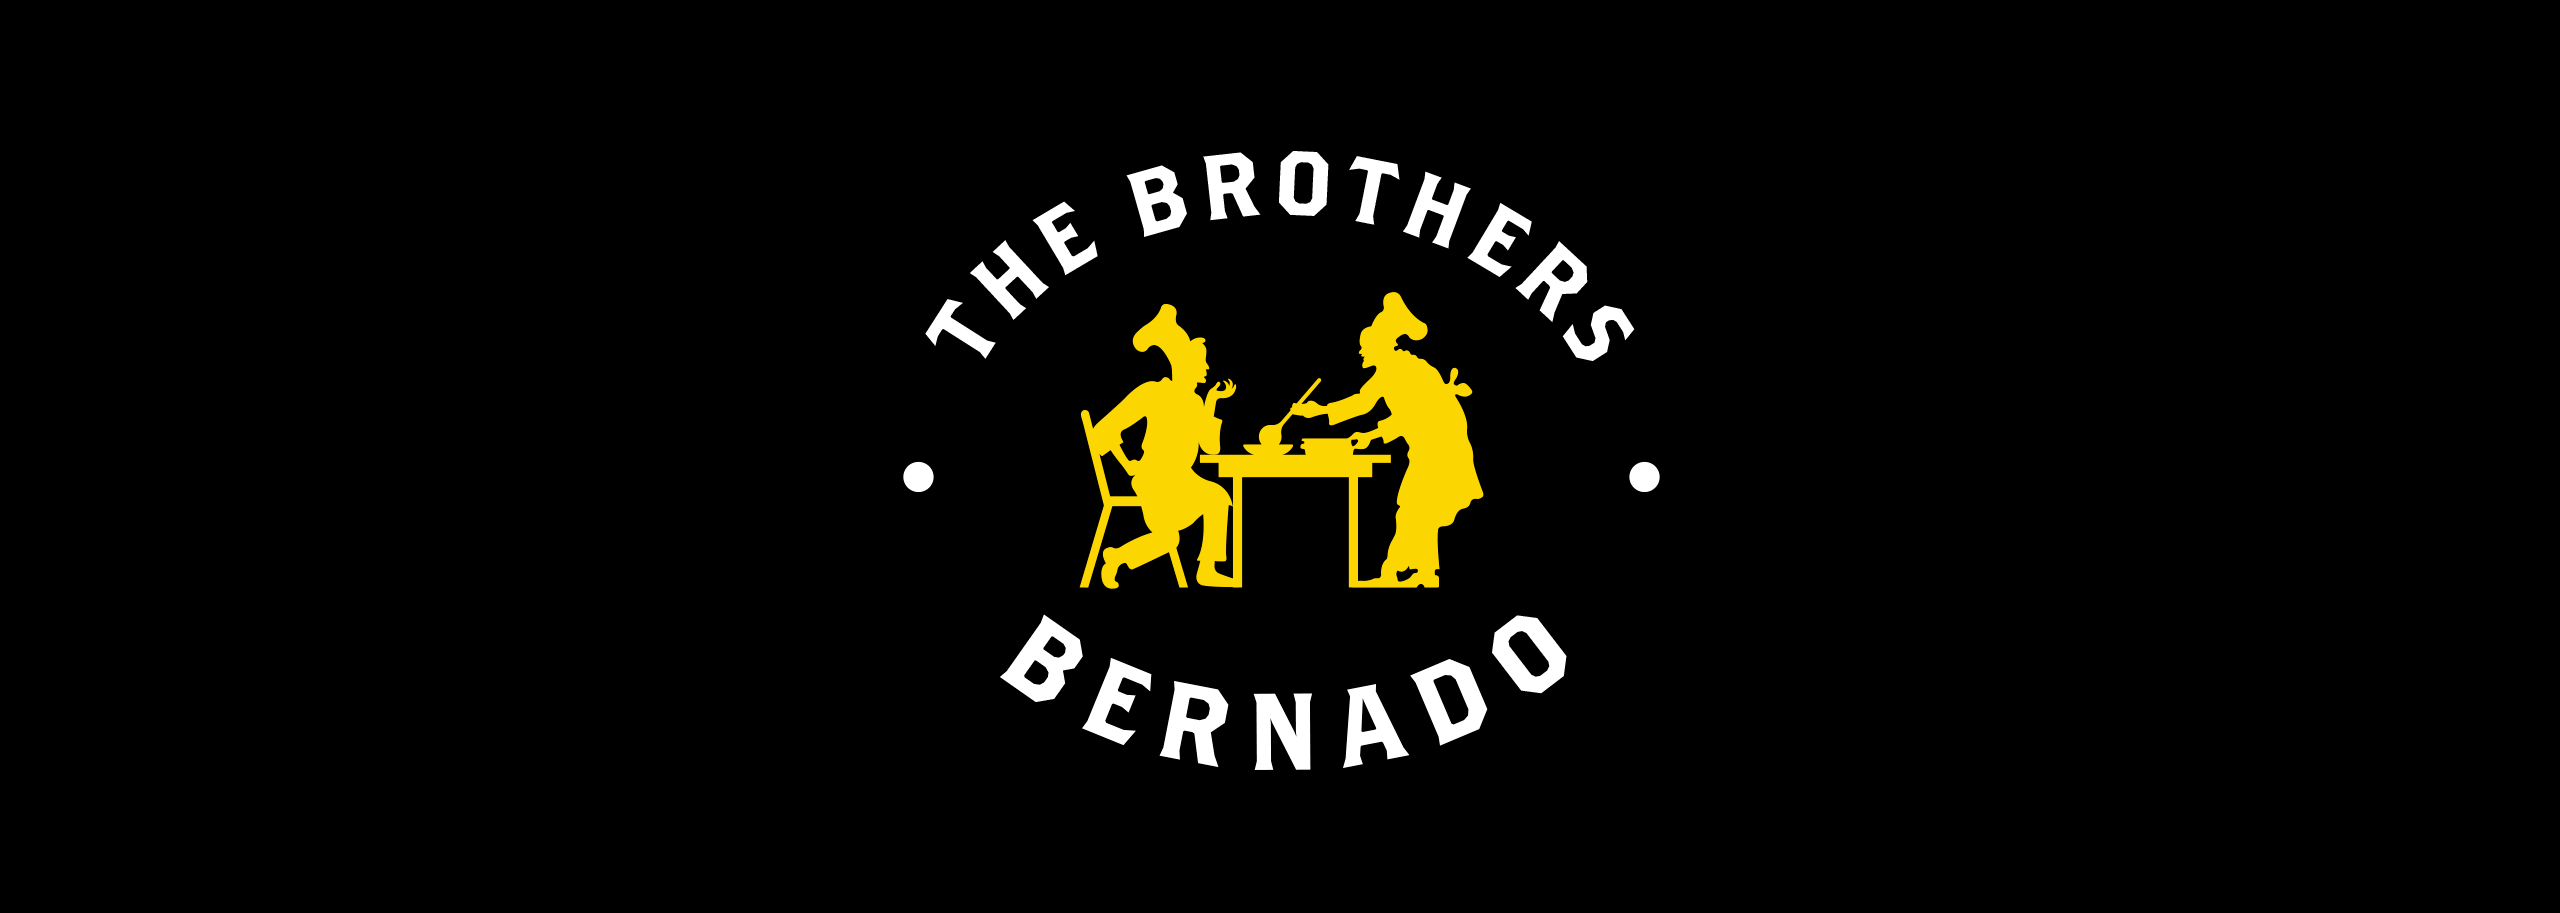 The Brothers Bernado Pasta Packaging-1